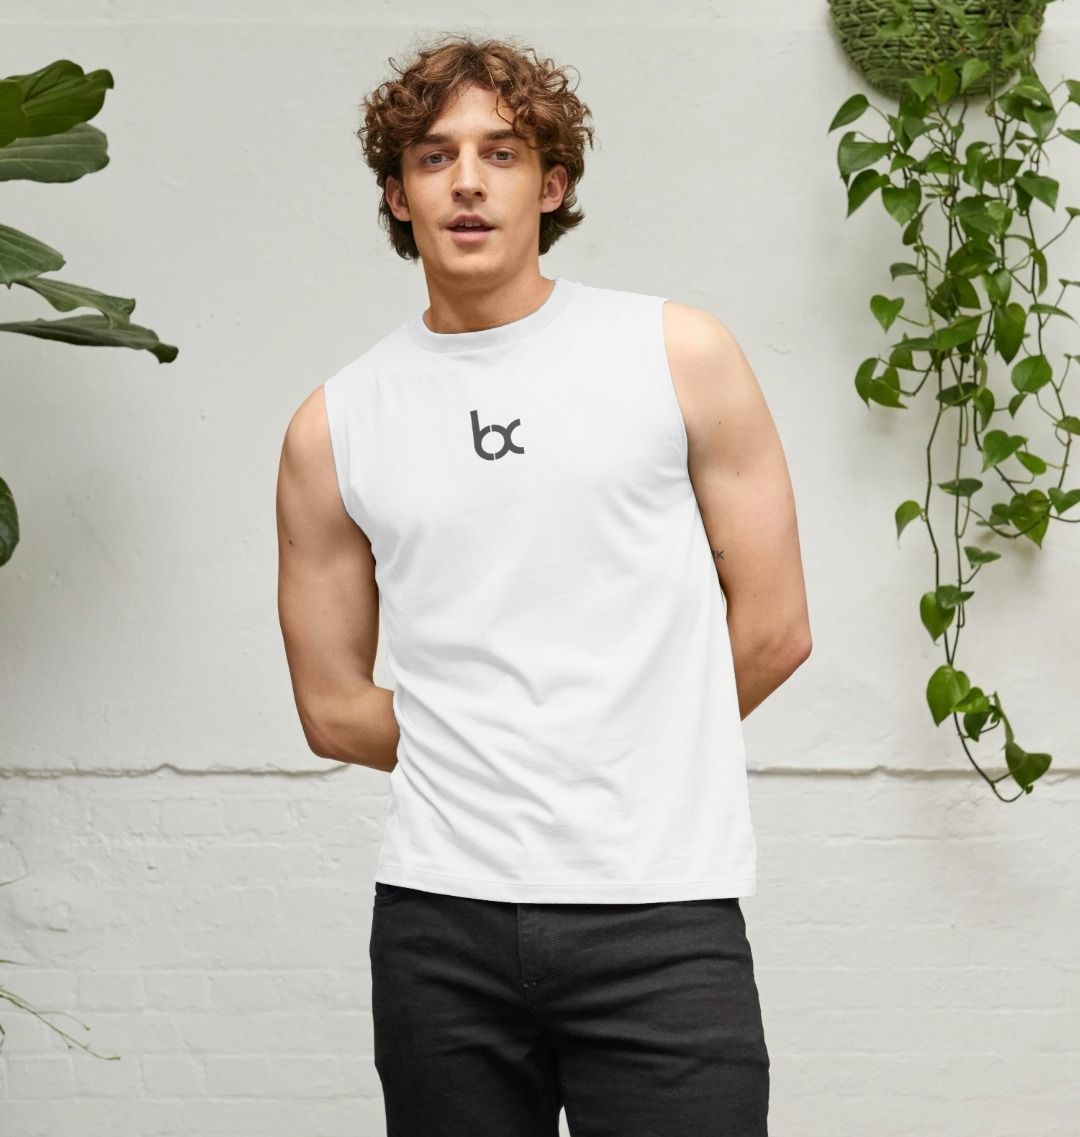 BX Vest Top - white with black logo